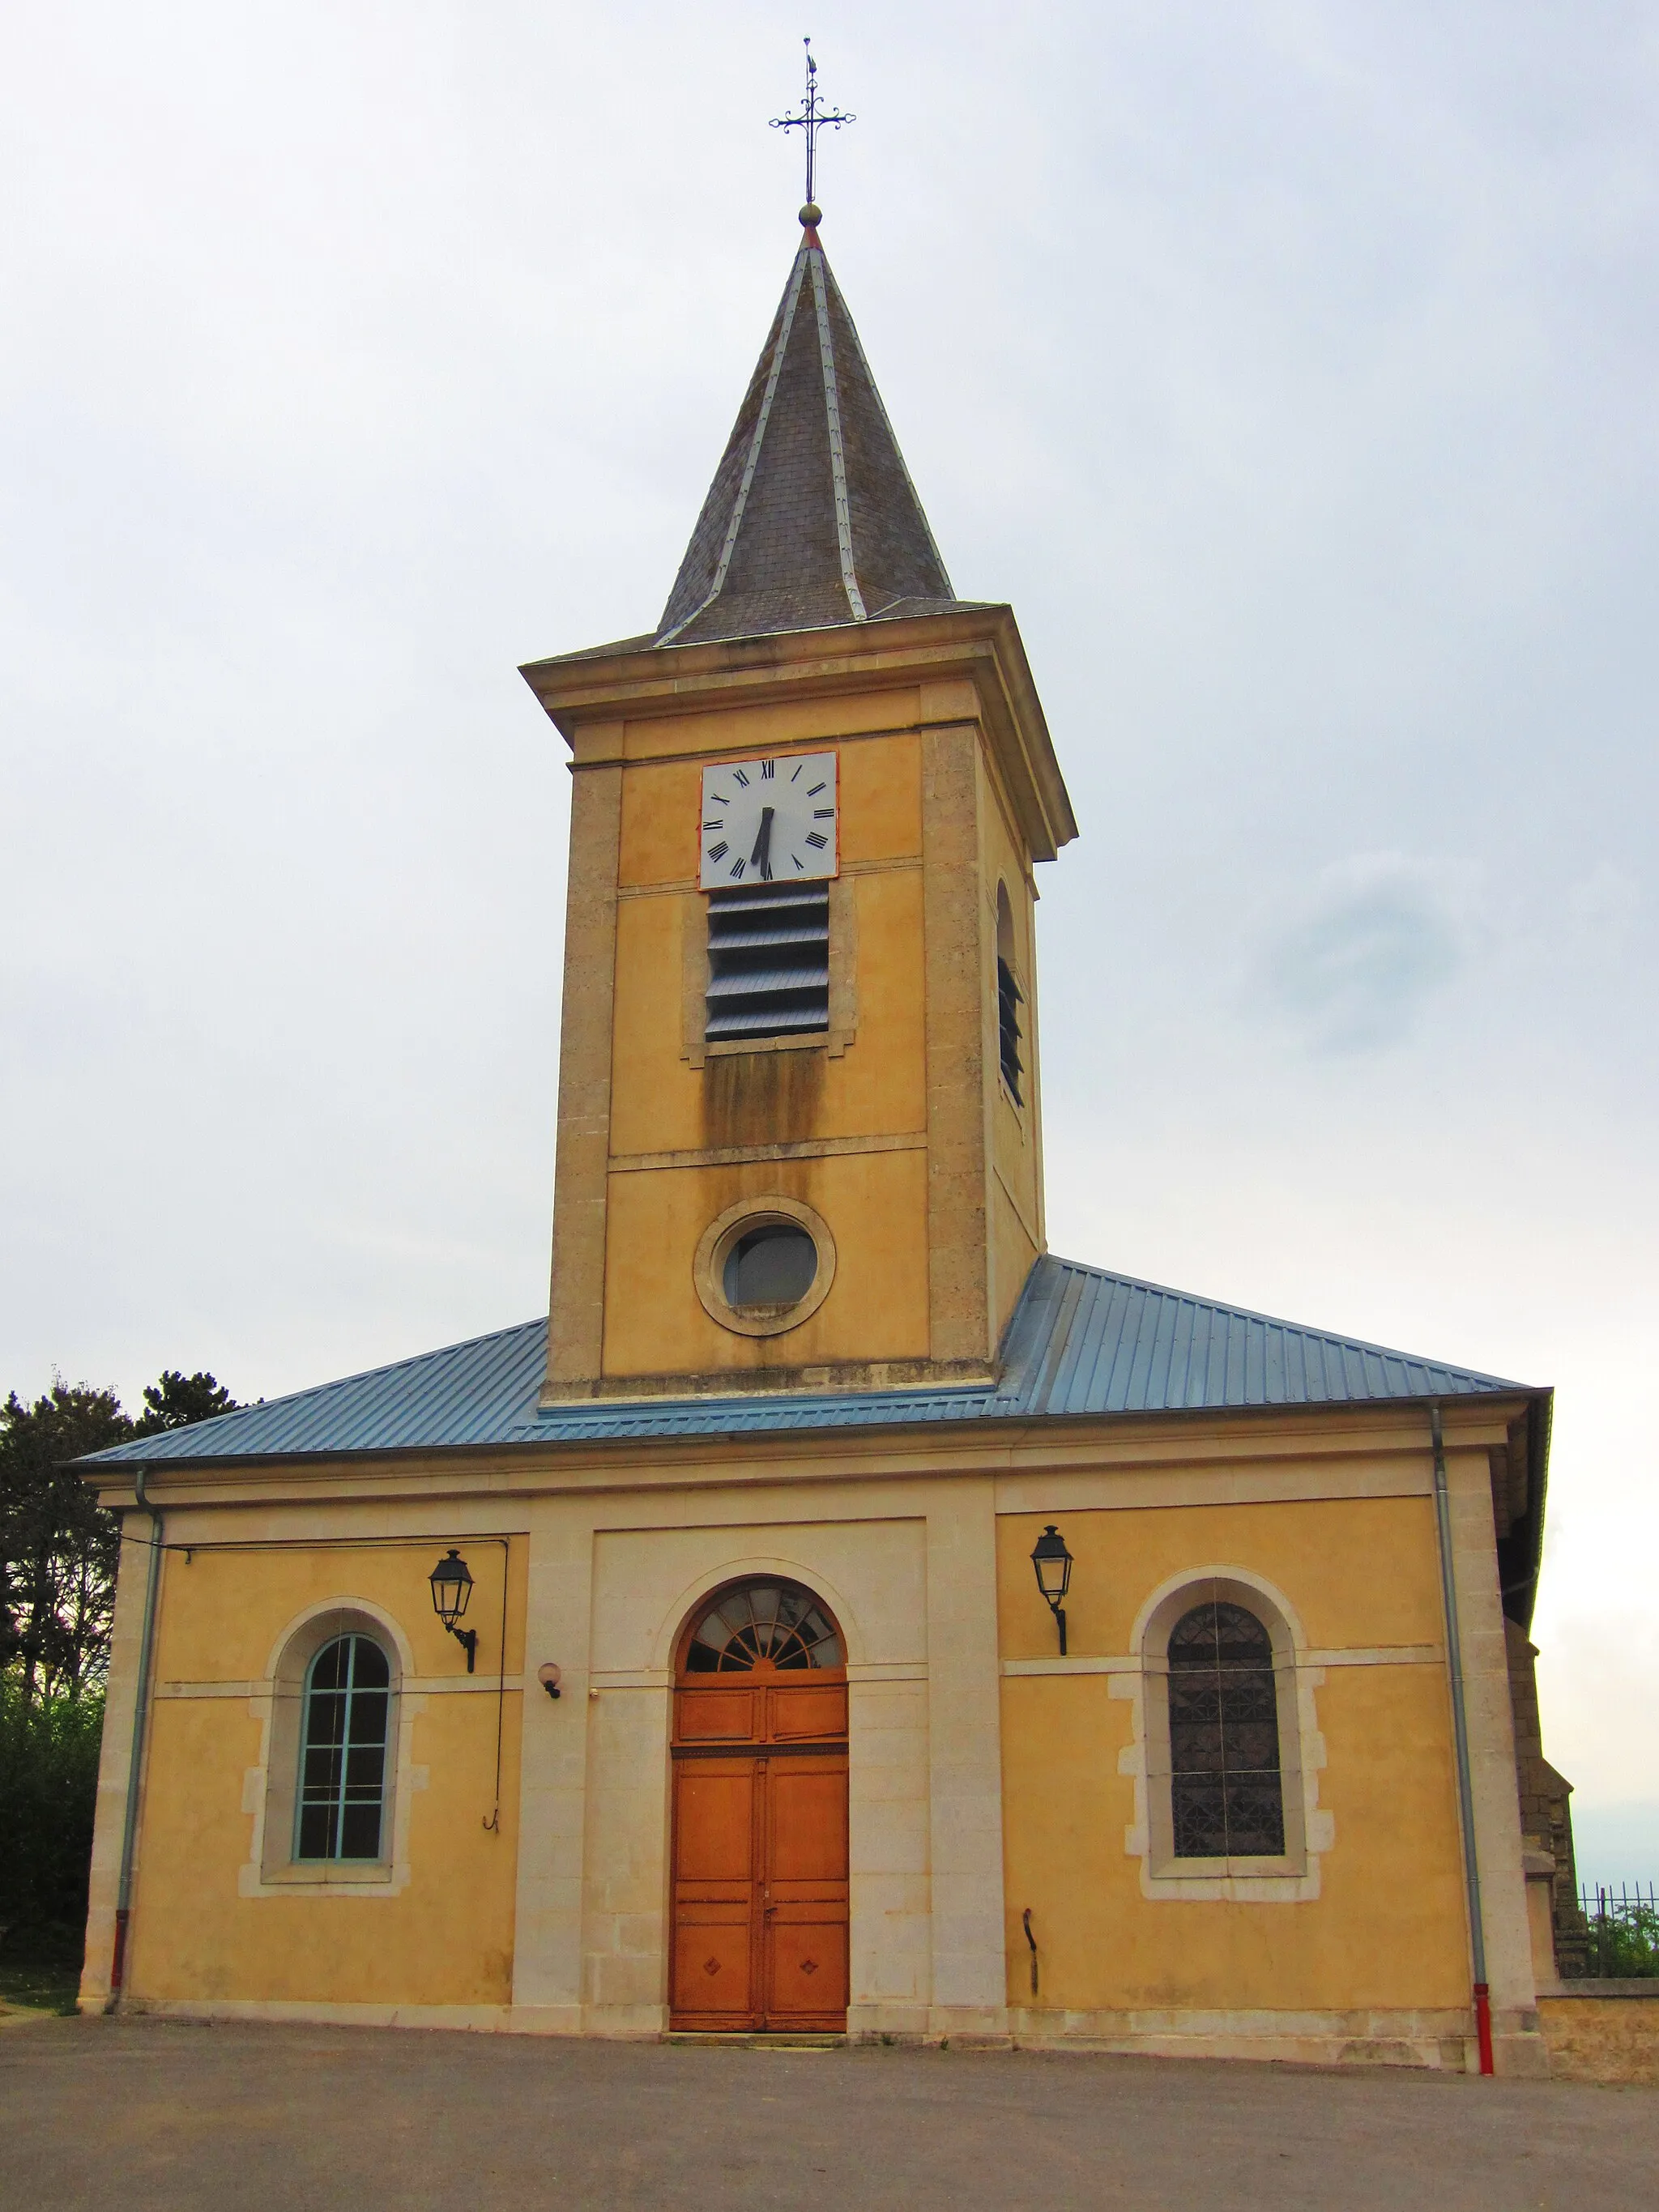 Photo showing: Vieville Cotes church